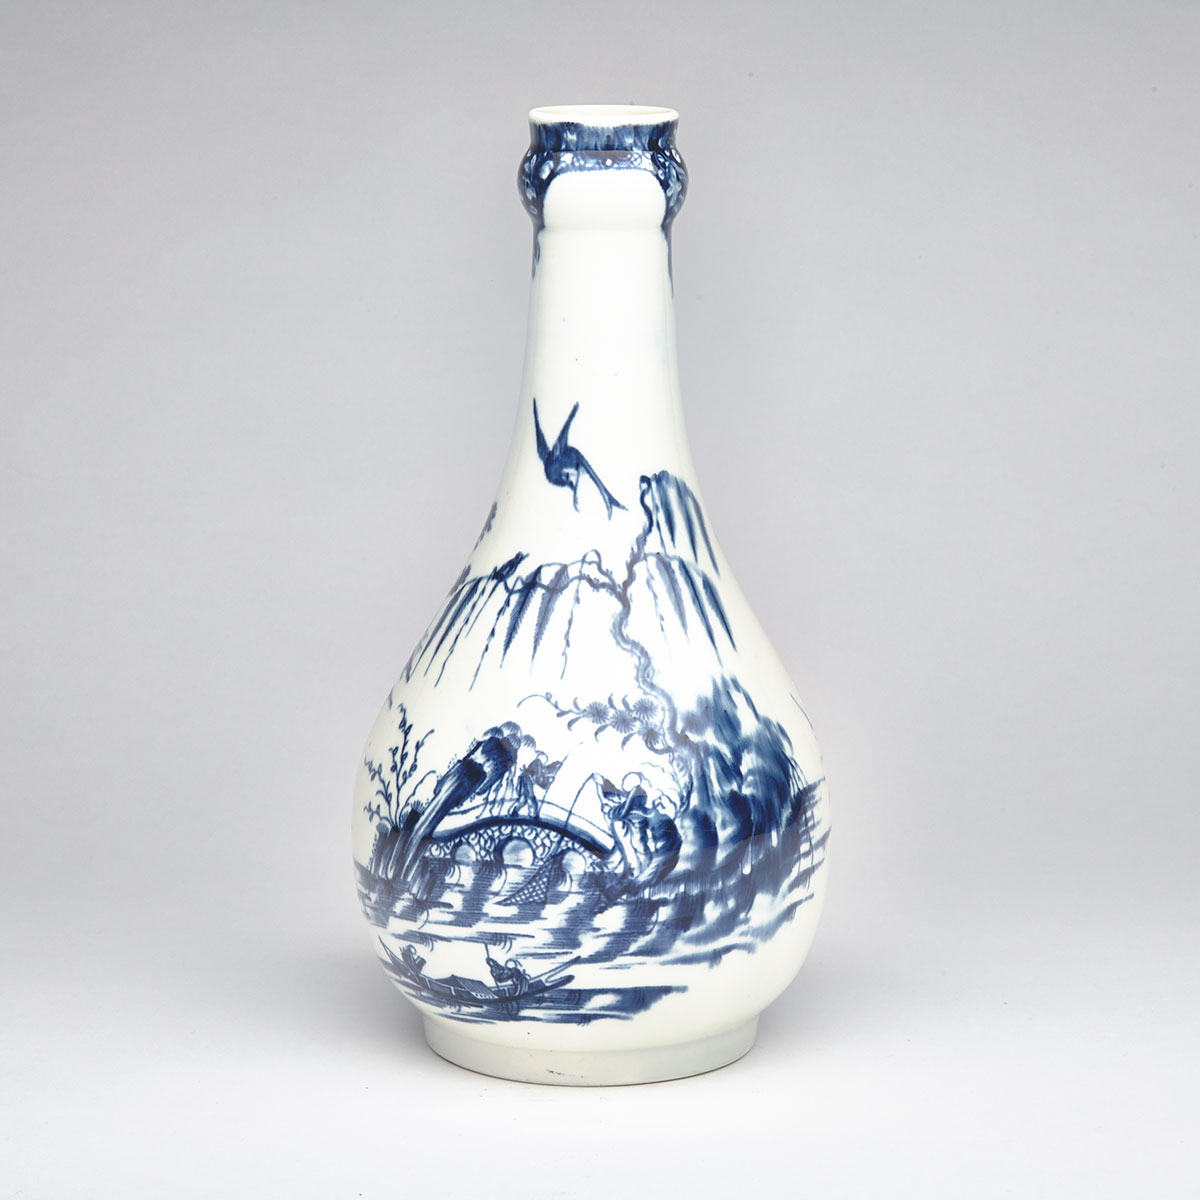 Worcester ‘Willow Bridge Fisherman’ Bottle Vase, c.1760-75